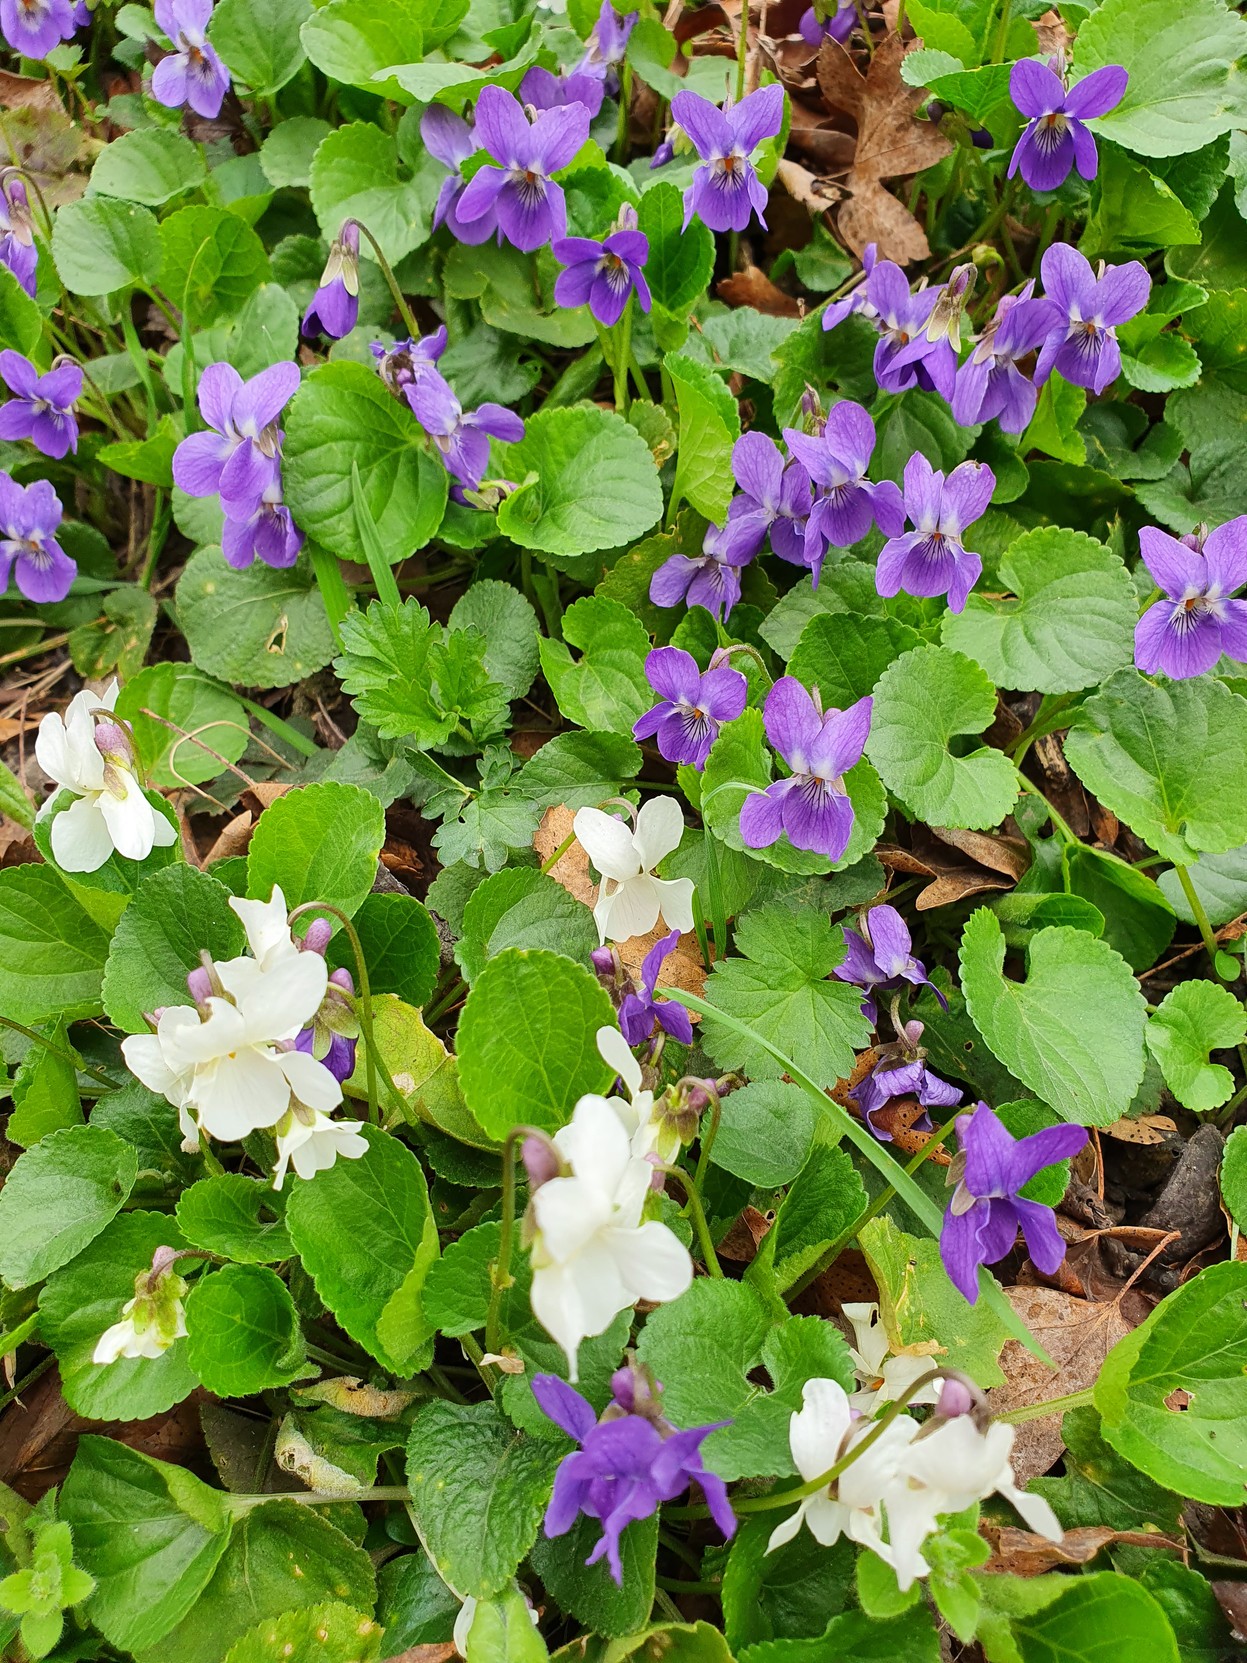 Violets of 2 colors